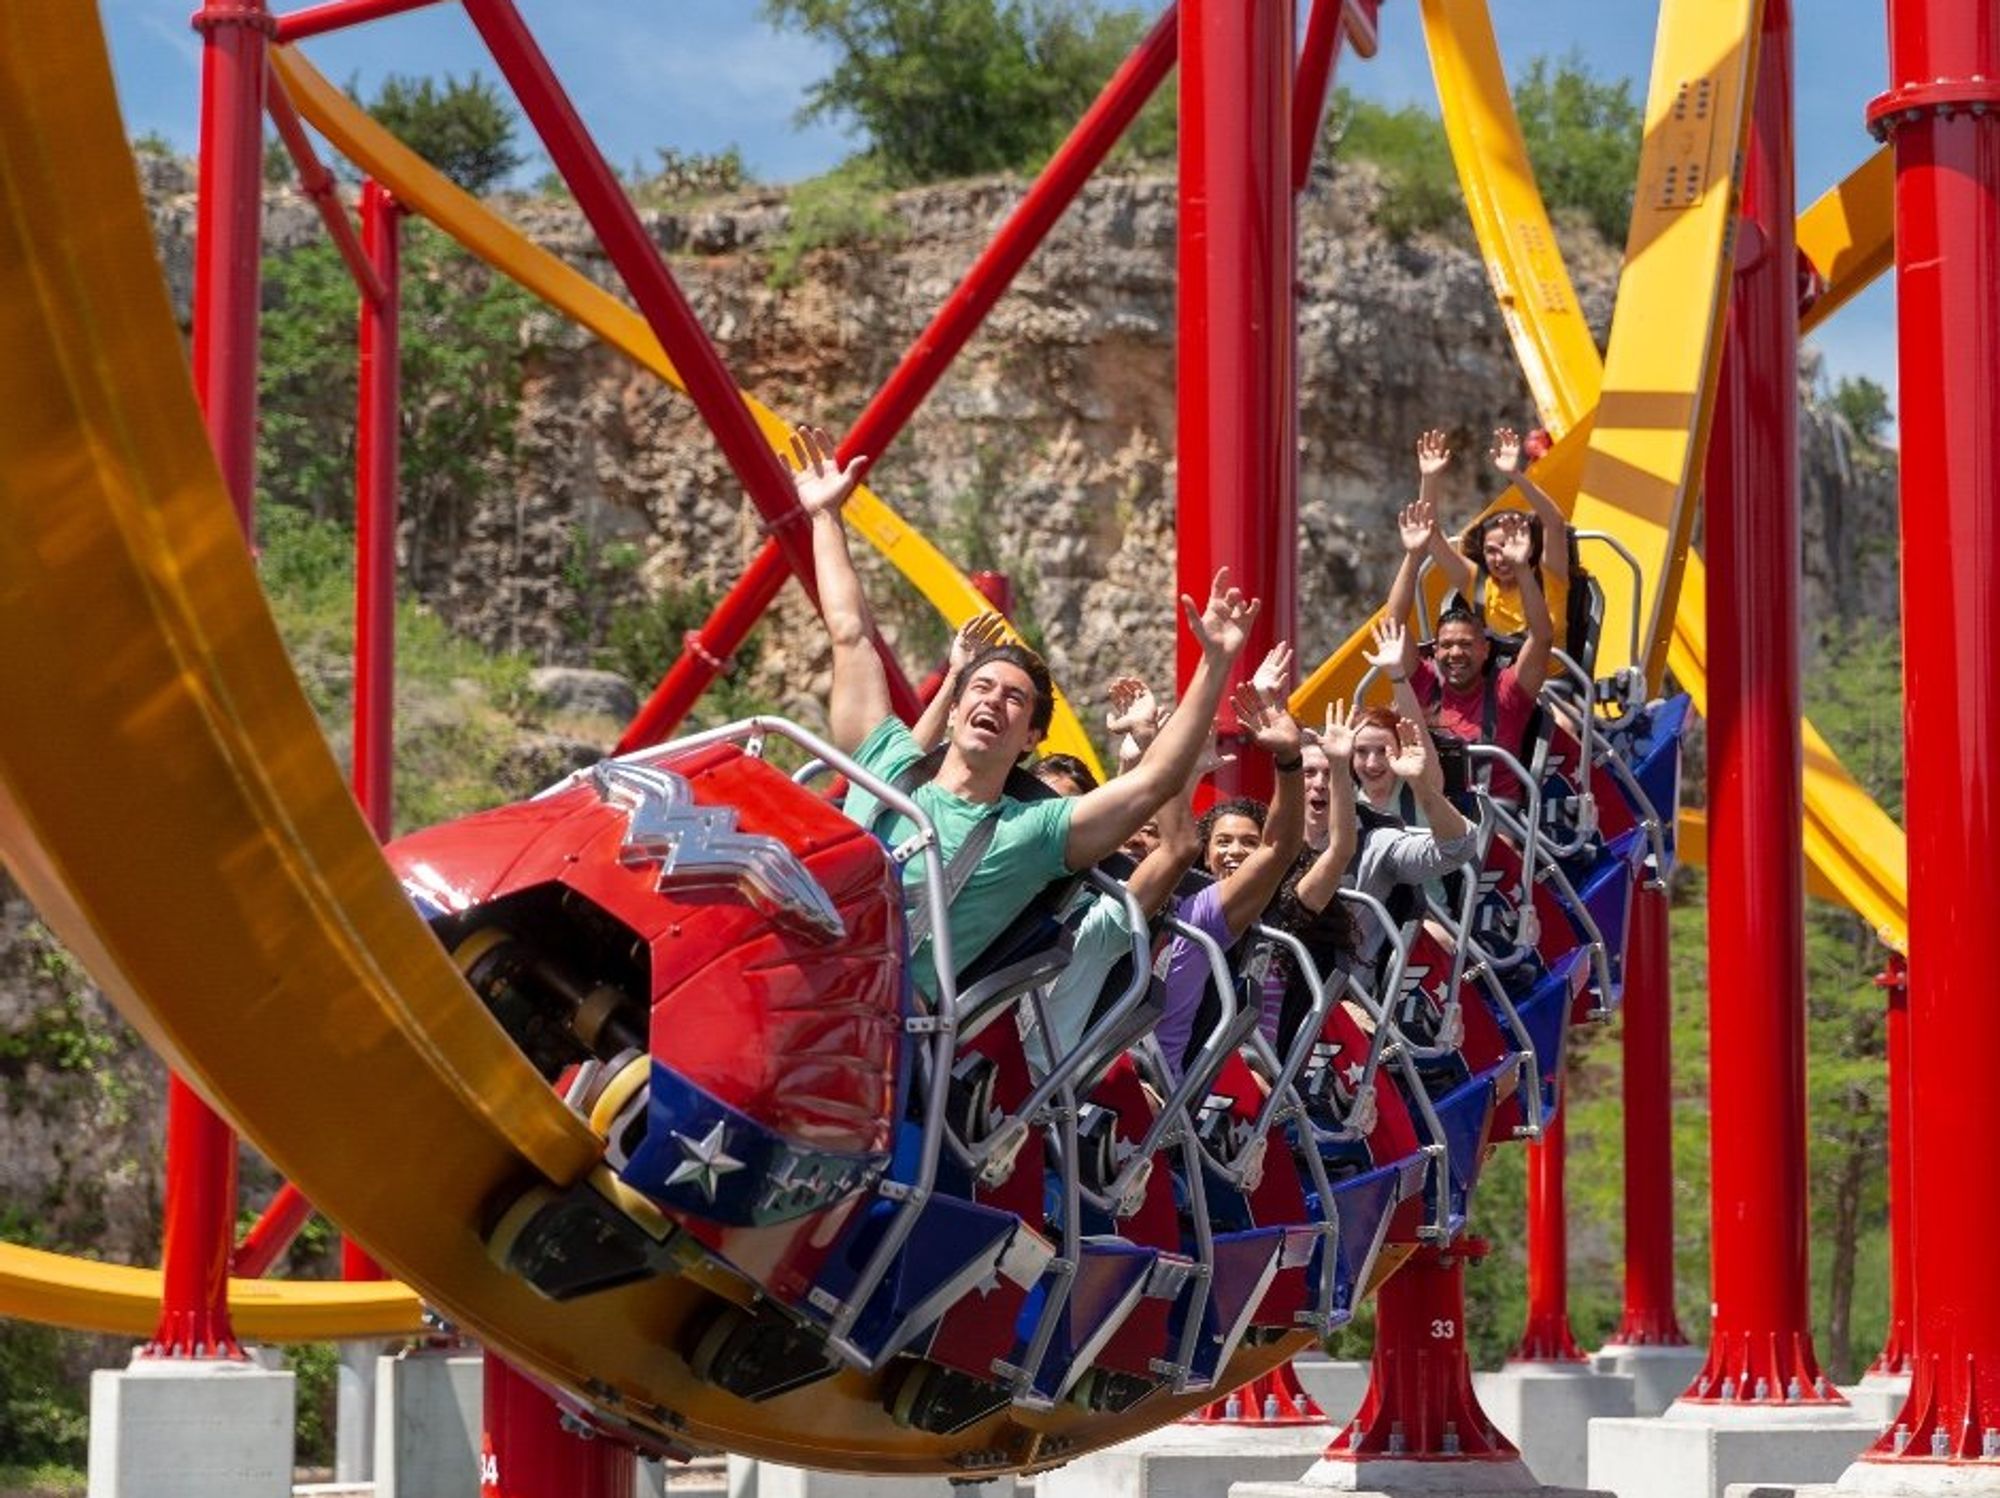 Six Flags Fiesta Texas Wonder Woman coaster